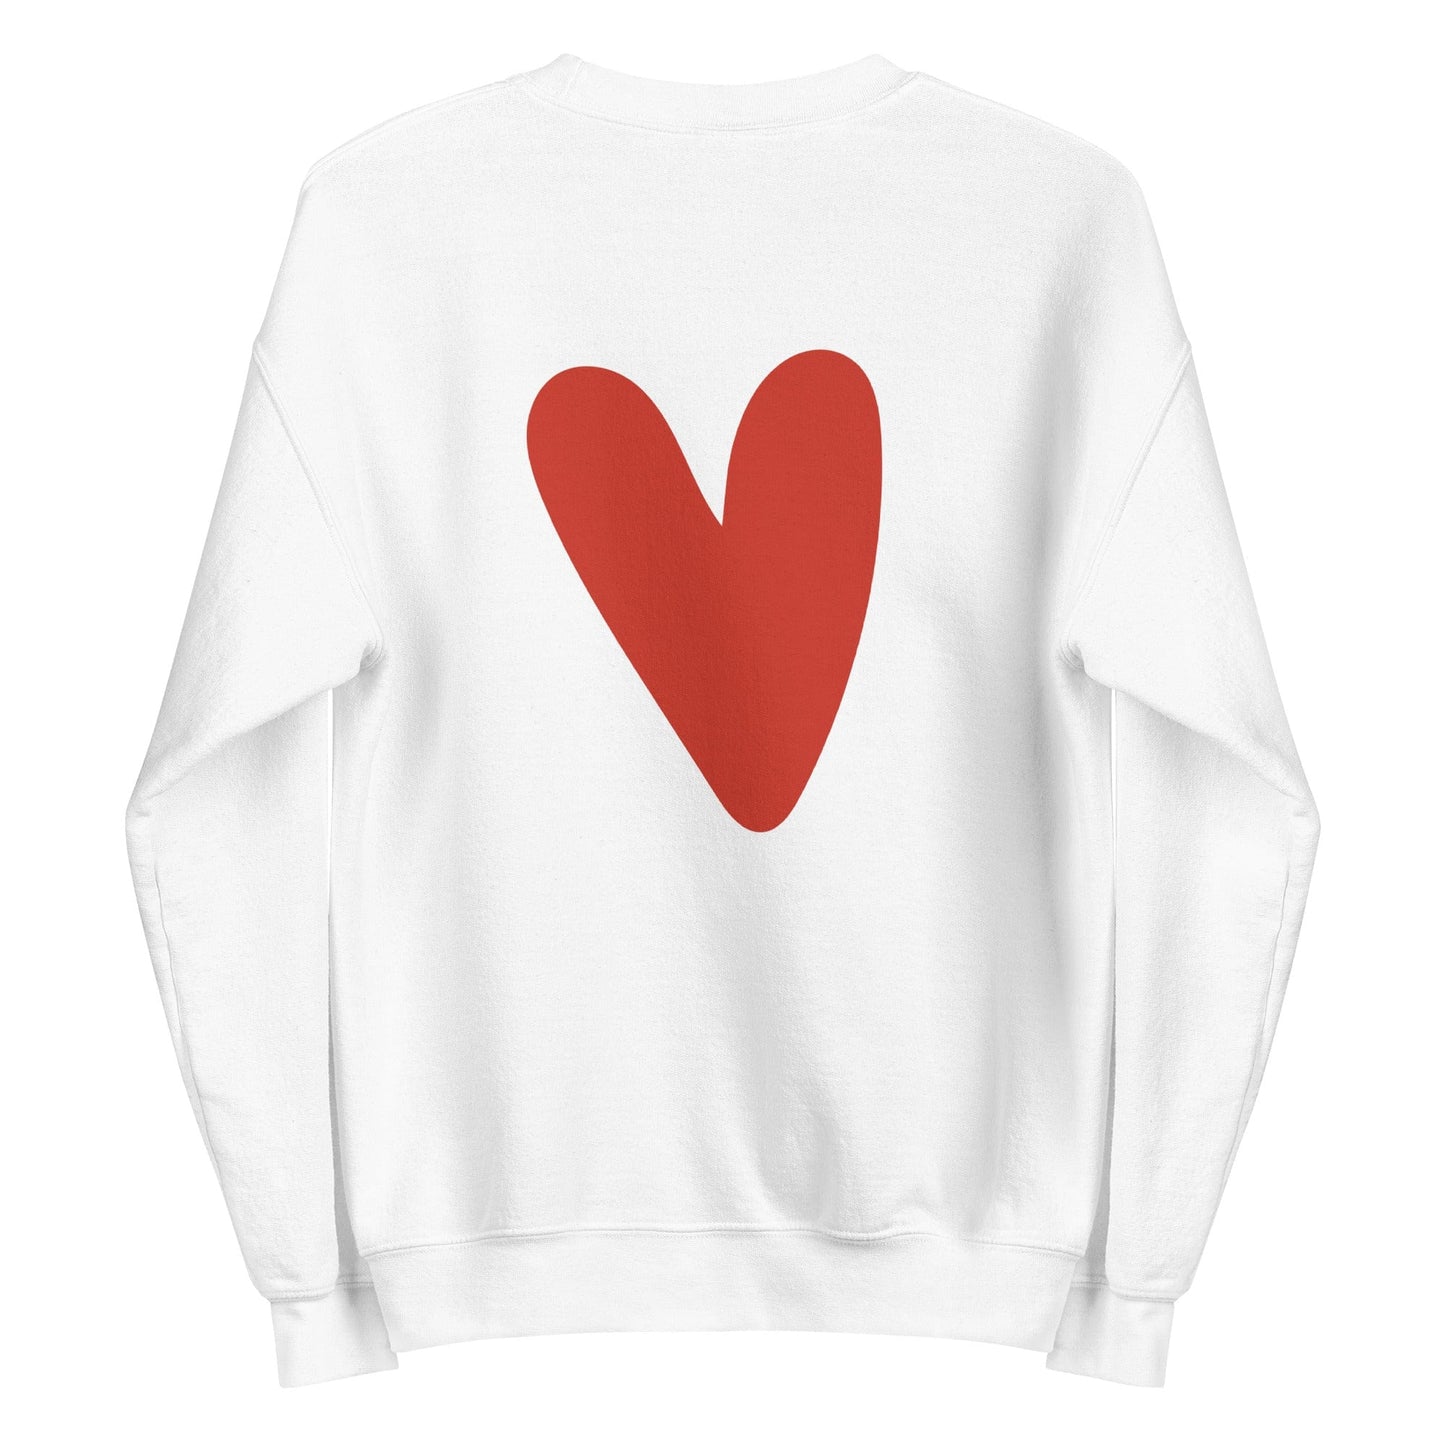 love-is-genderless-sweatshirt-white-and-red-back